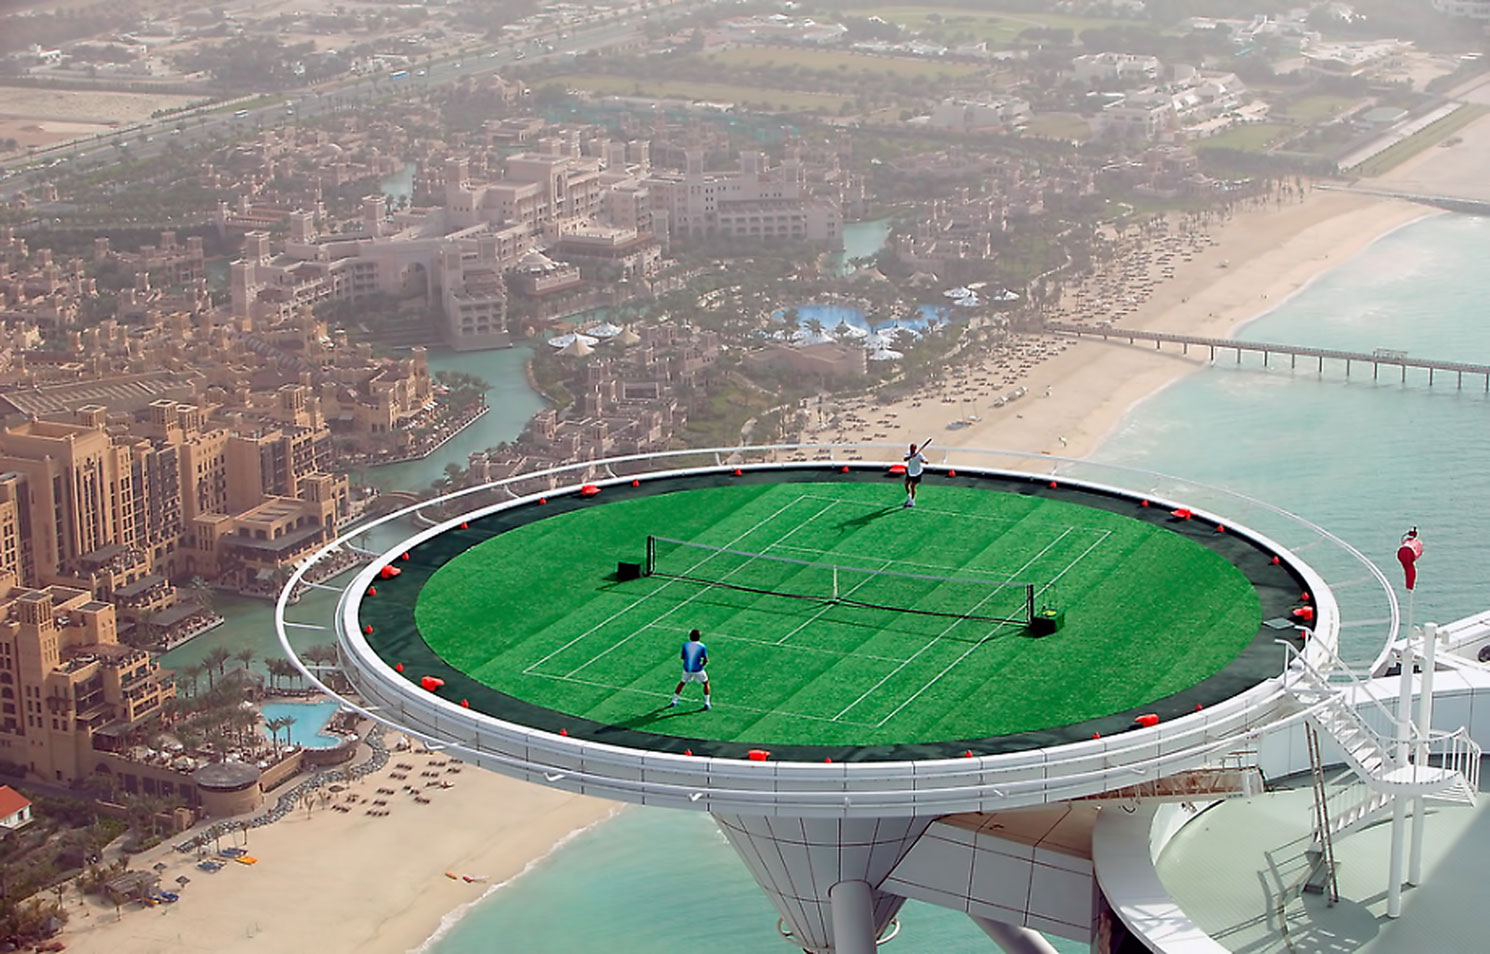 burj-al-arab-helikopterlandeplatz-tennis